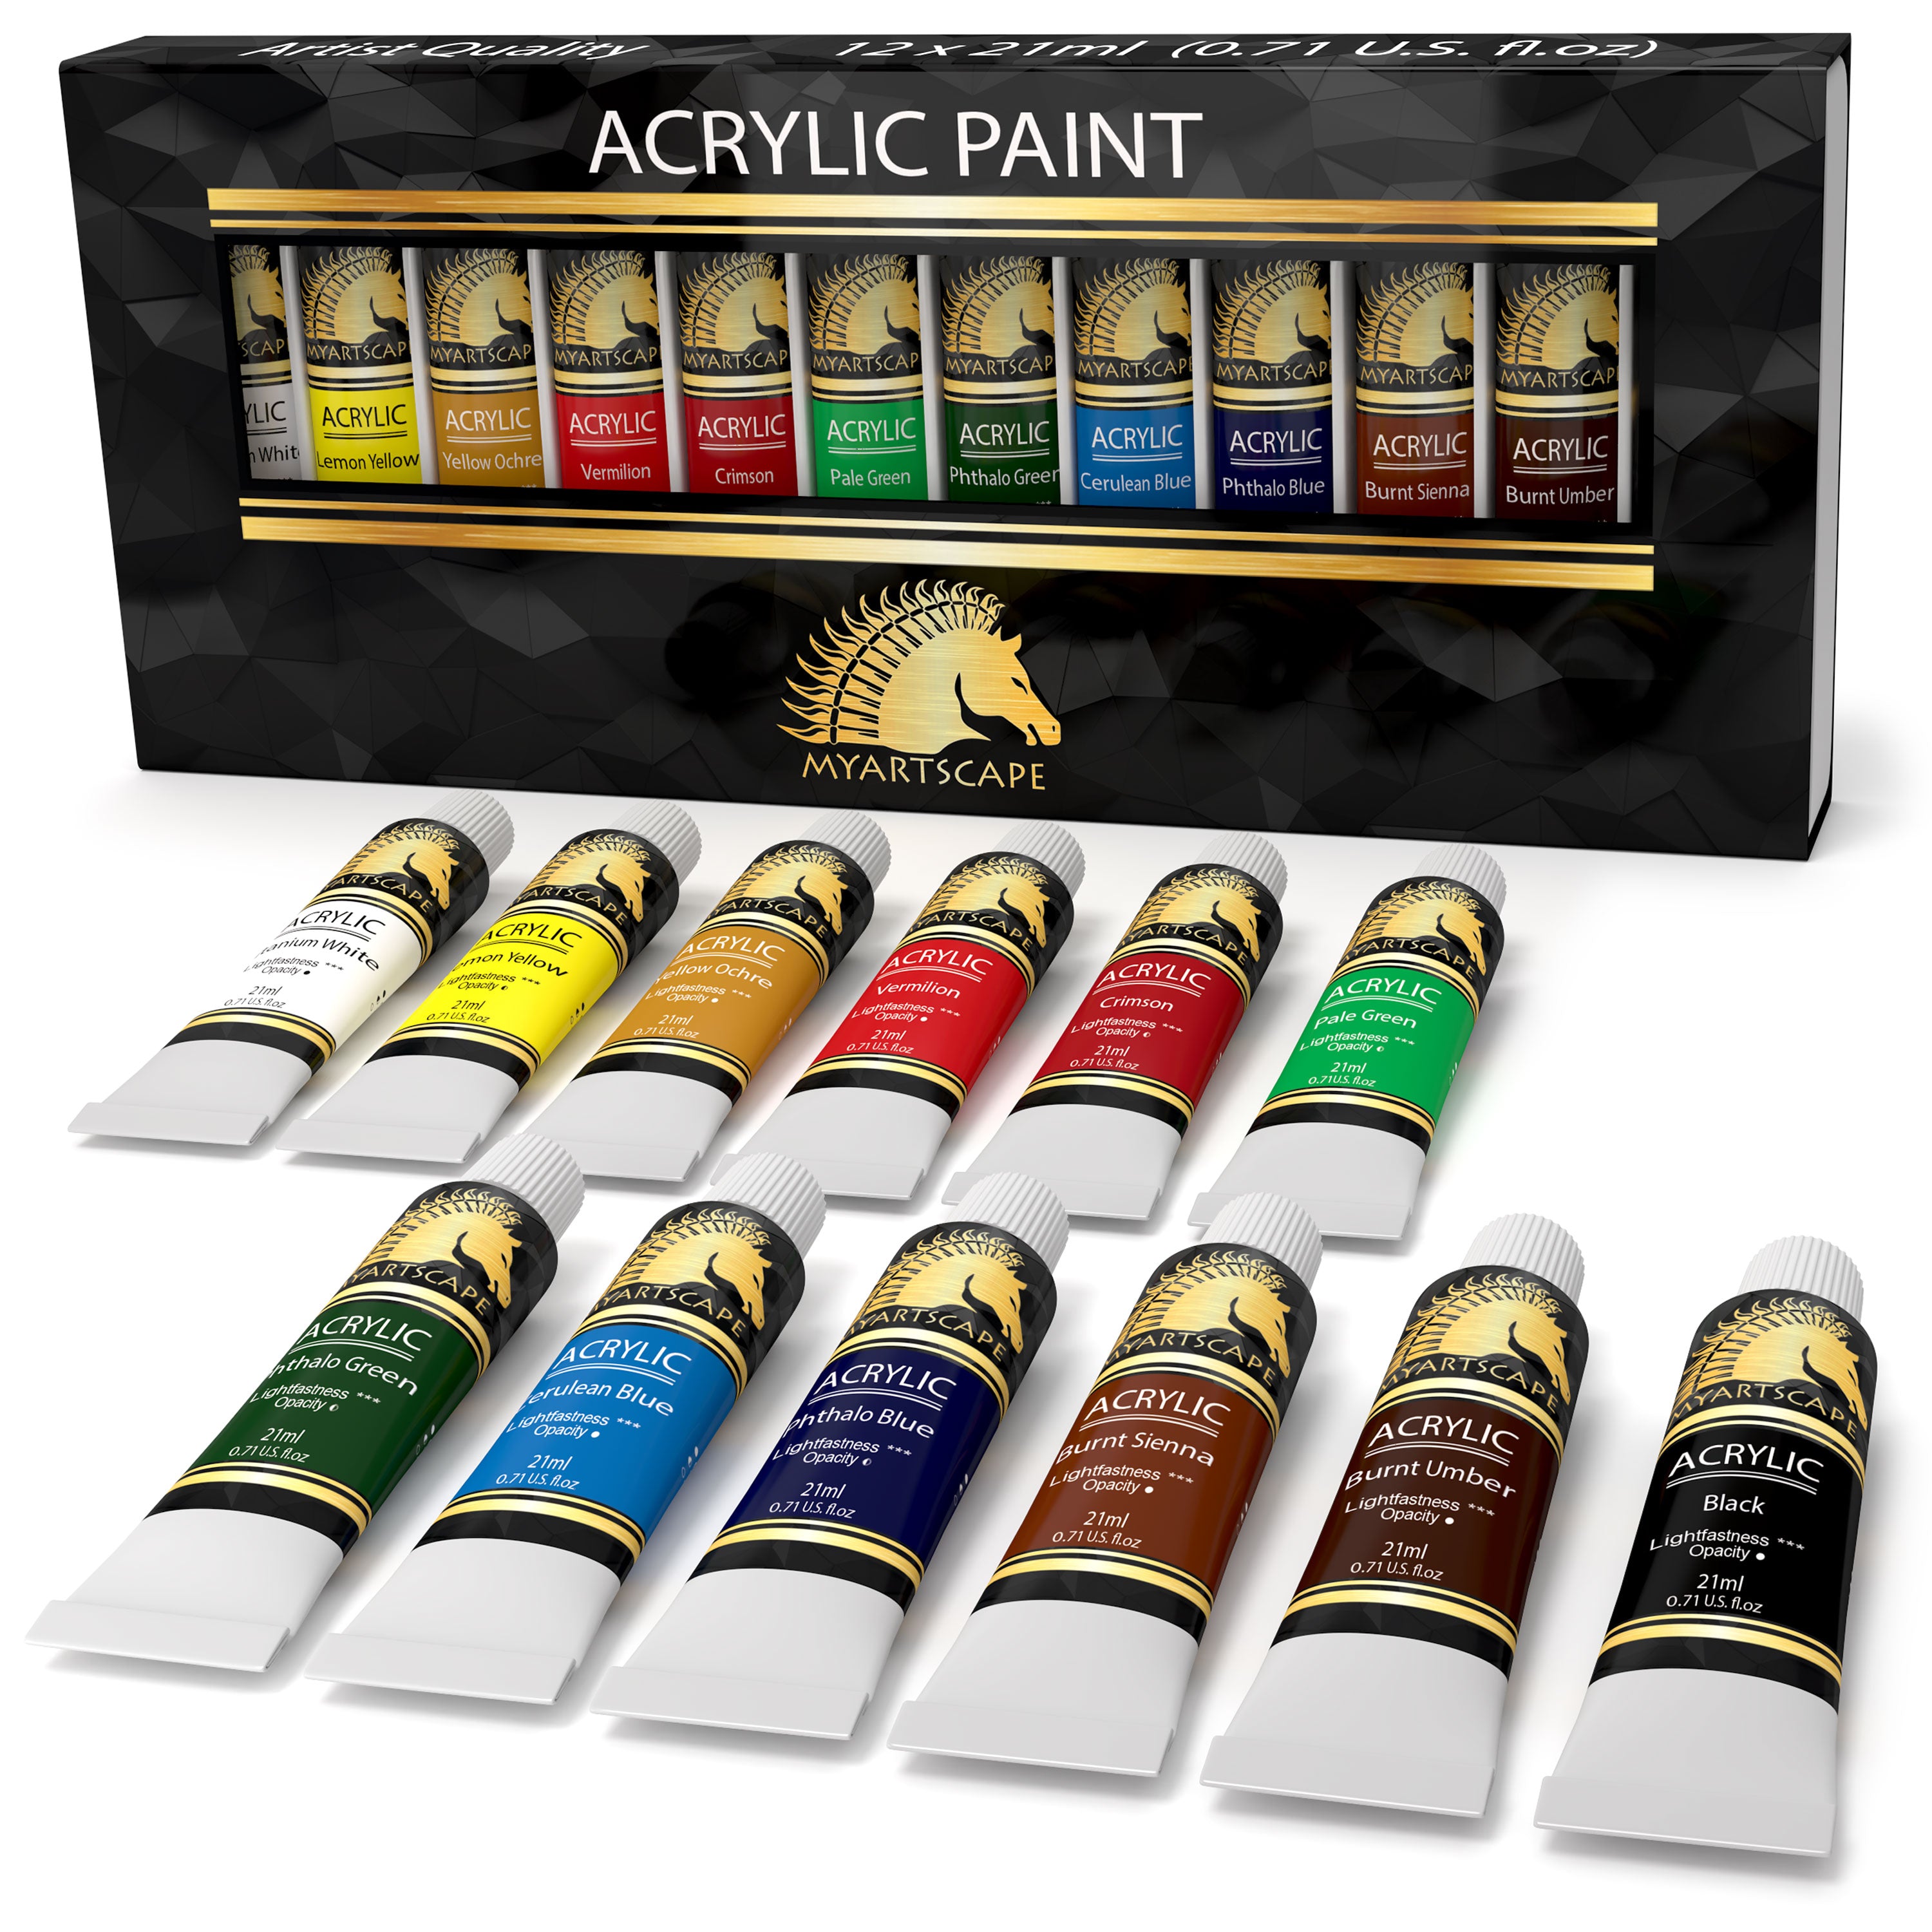 Acrylic Paint Set